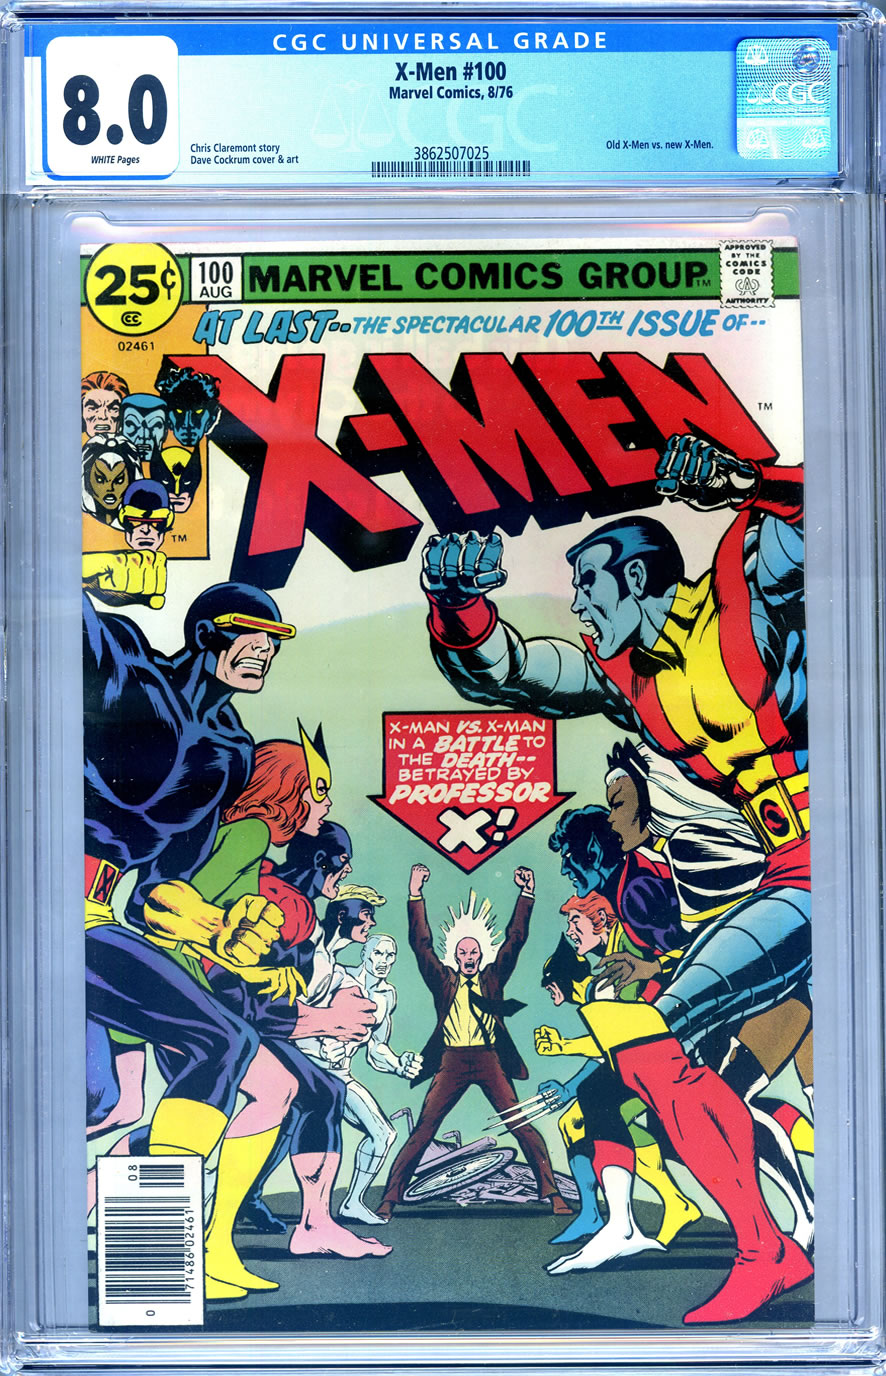 Uncanny X-men #307 VF/NM Newstand Edition Marvel Comics Xmen